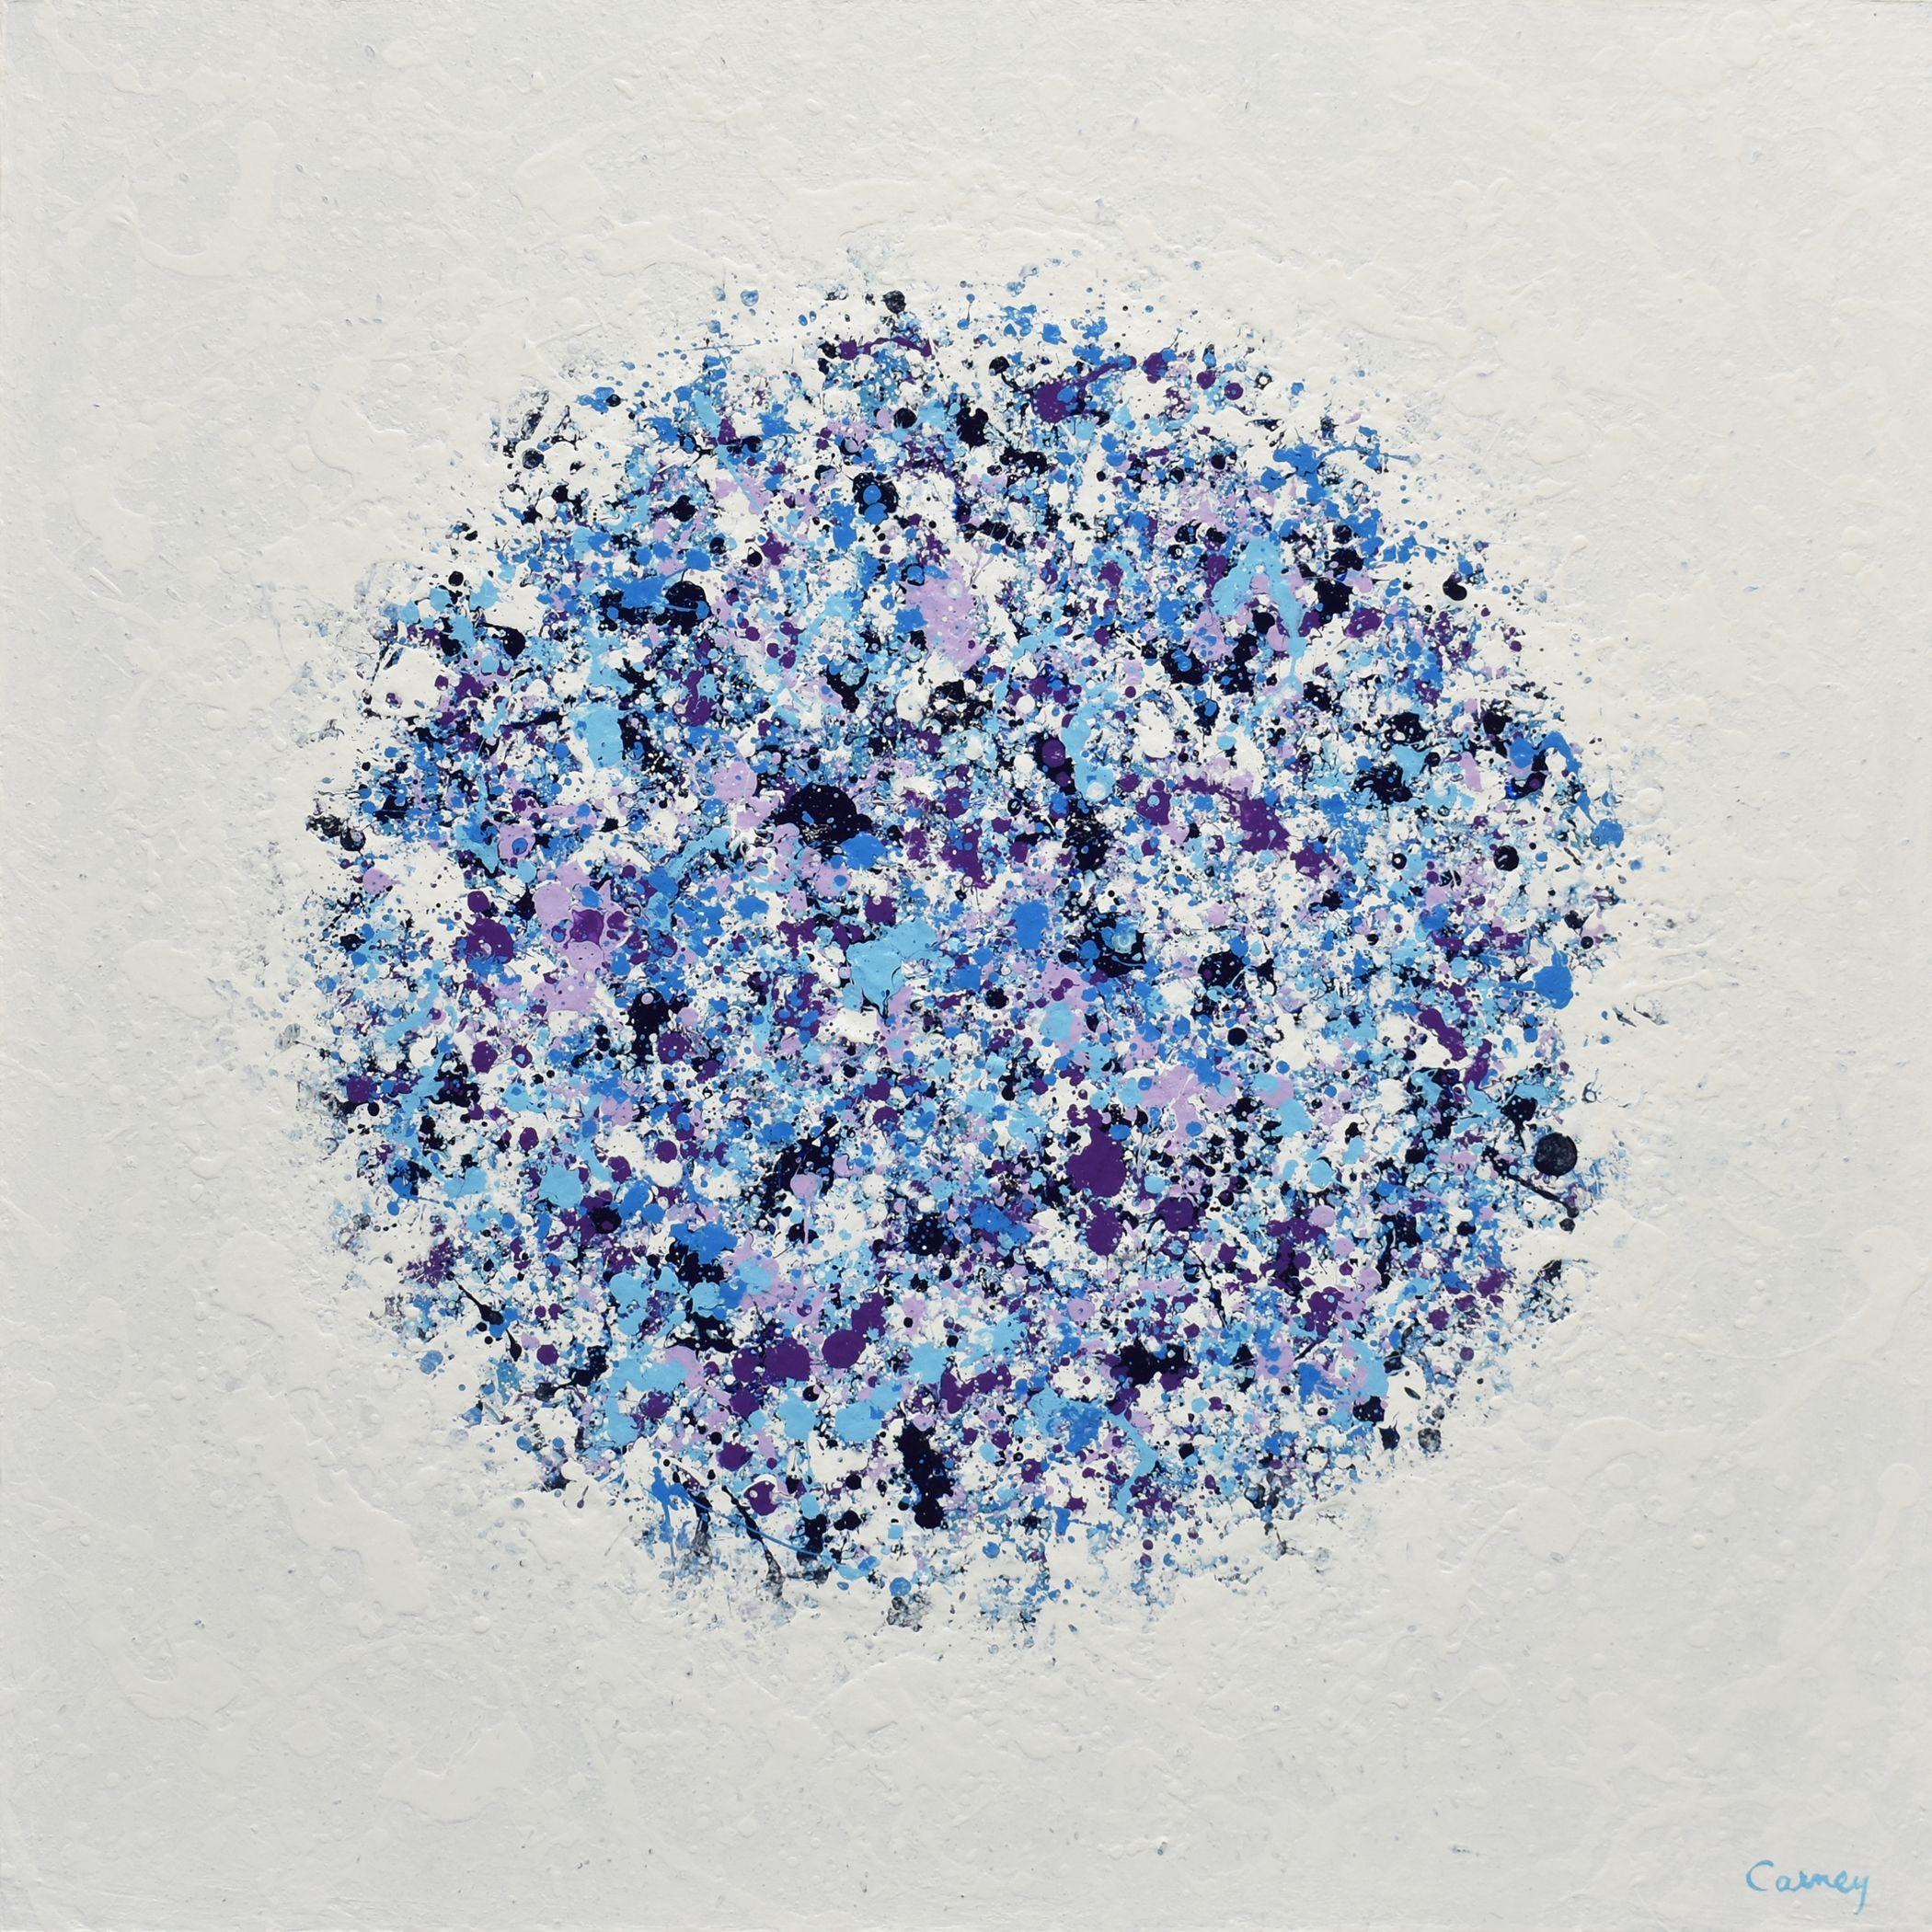 â€œPetal Burst 41â€ is an abstract painting in acrylic on wood panel. Various shades of blue and purple explode onto a textured white background. It is part of the "Petal Burst" series, a collection of floral abstract paintings where drip and